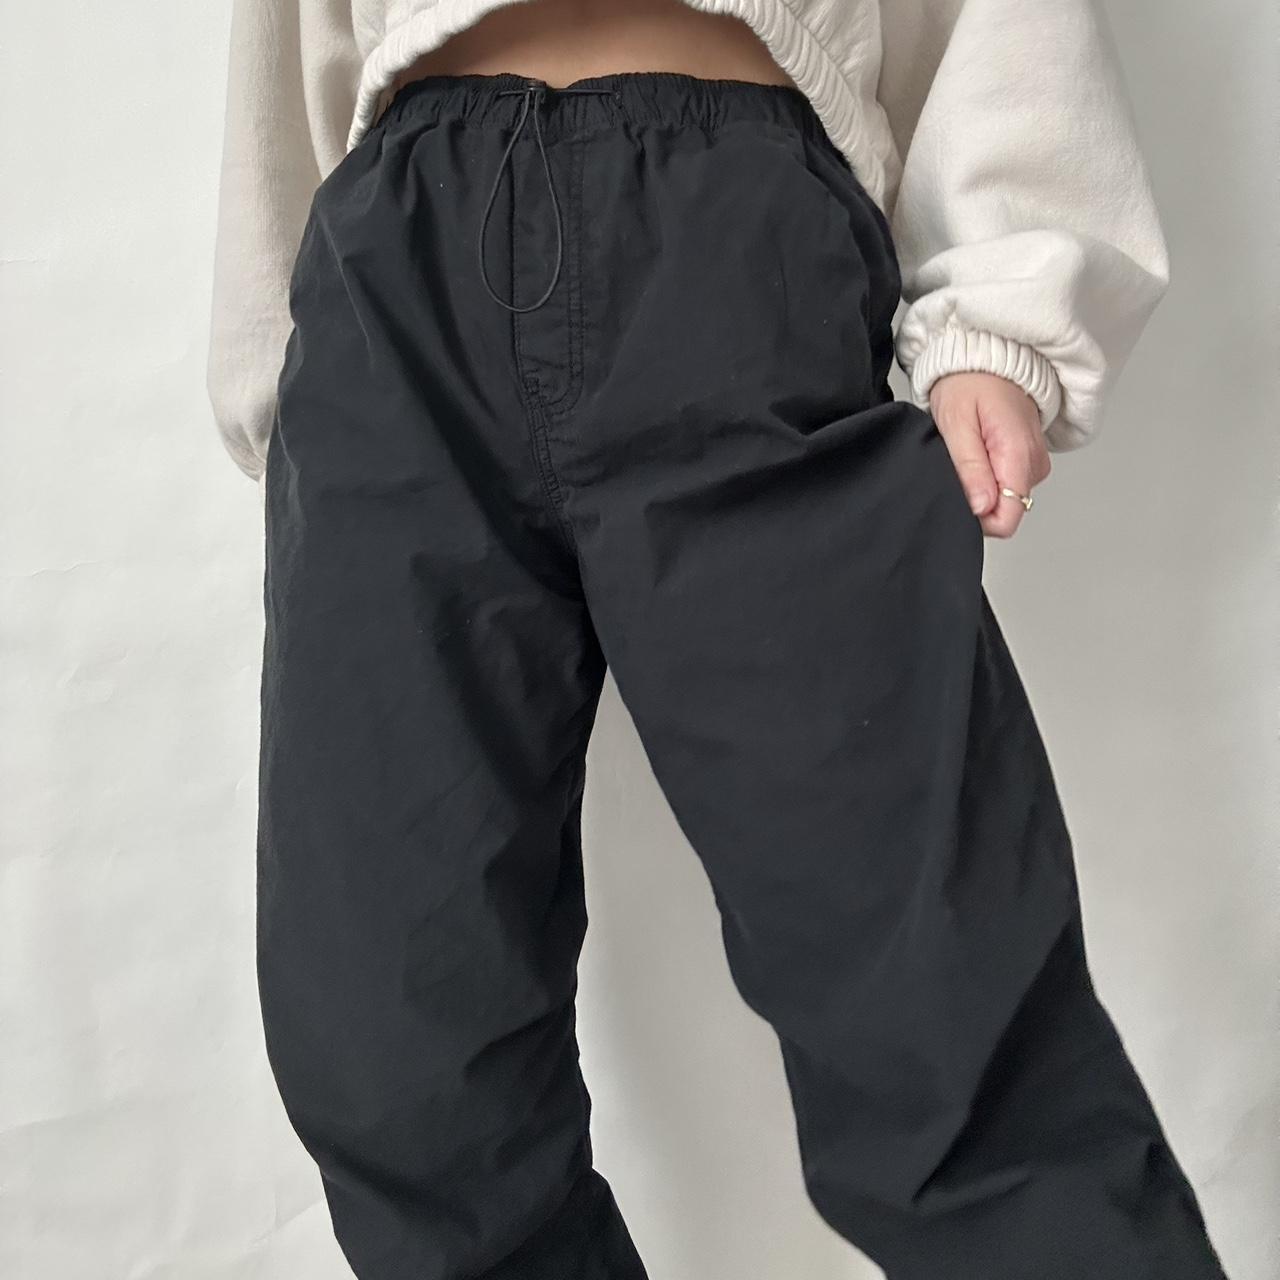 Zara black parachute pants 100% cotton labeled size... - Depop